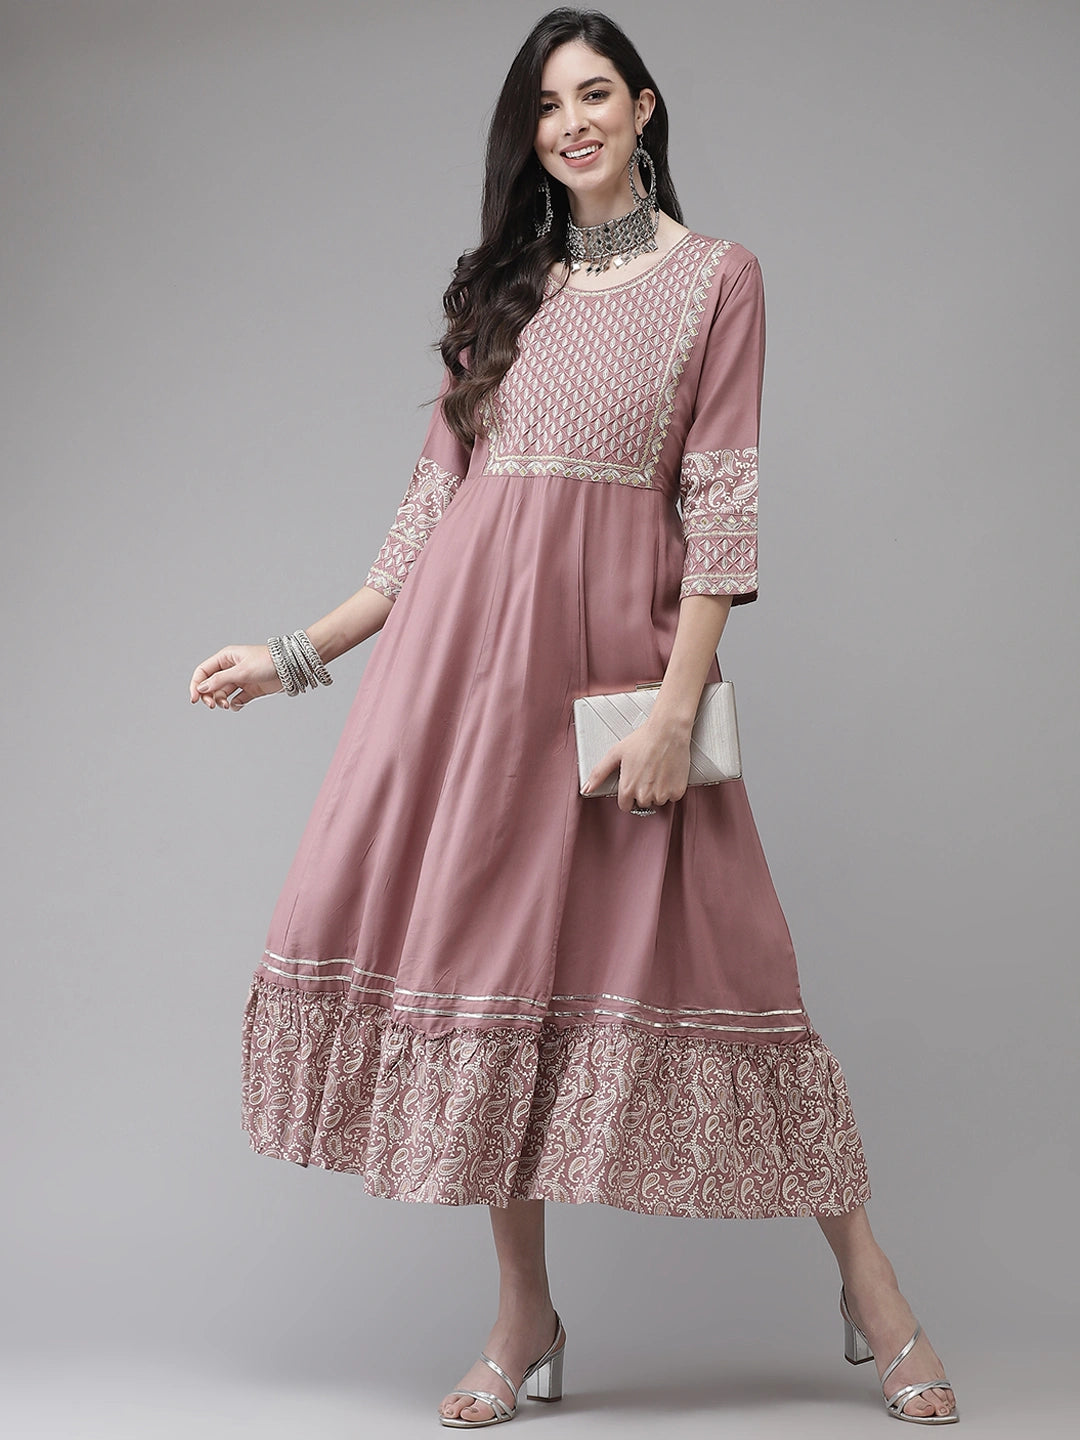 Pink Embroidered Dress-Yufta Store-2119DRSPKM